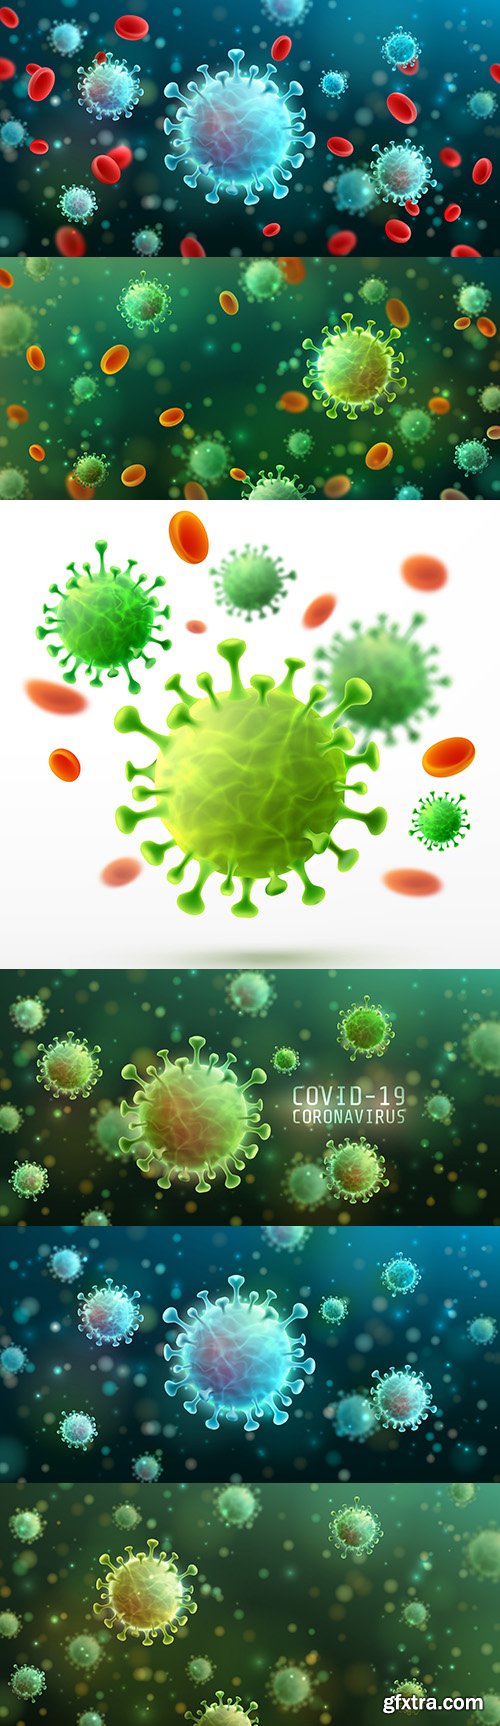 Coronavirus 2019-nkov and cell diseases viral background